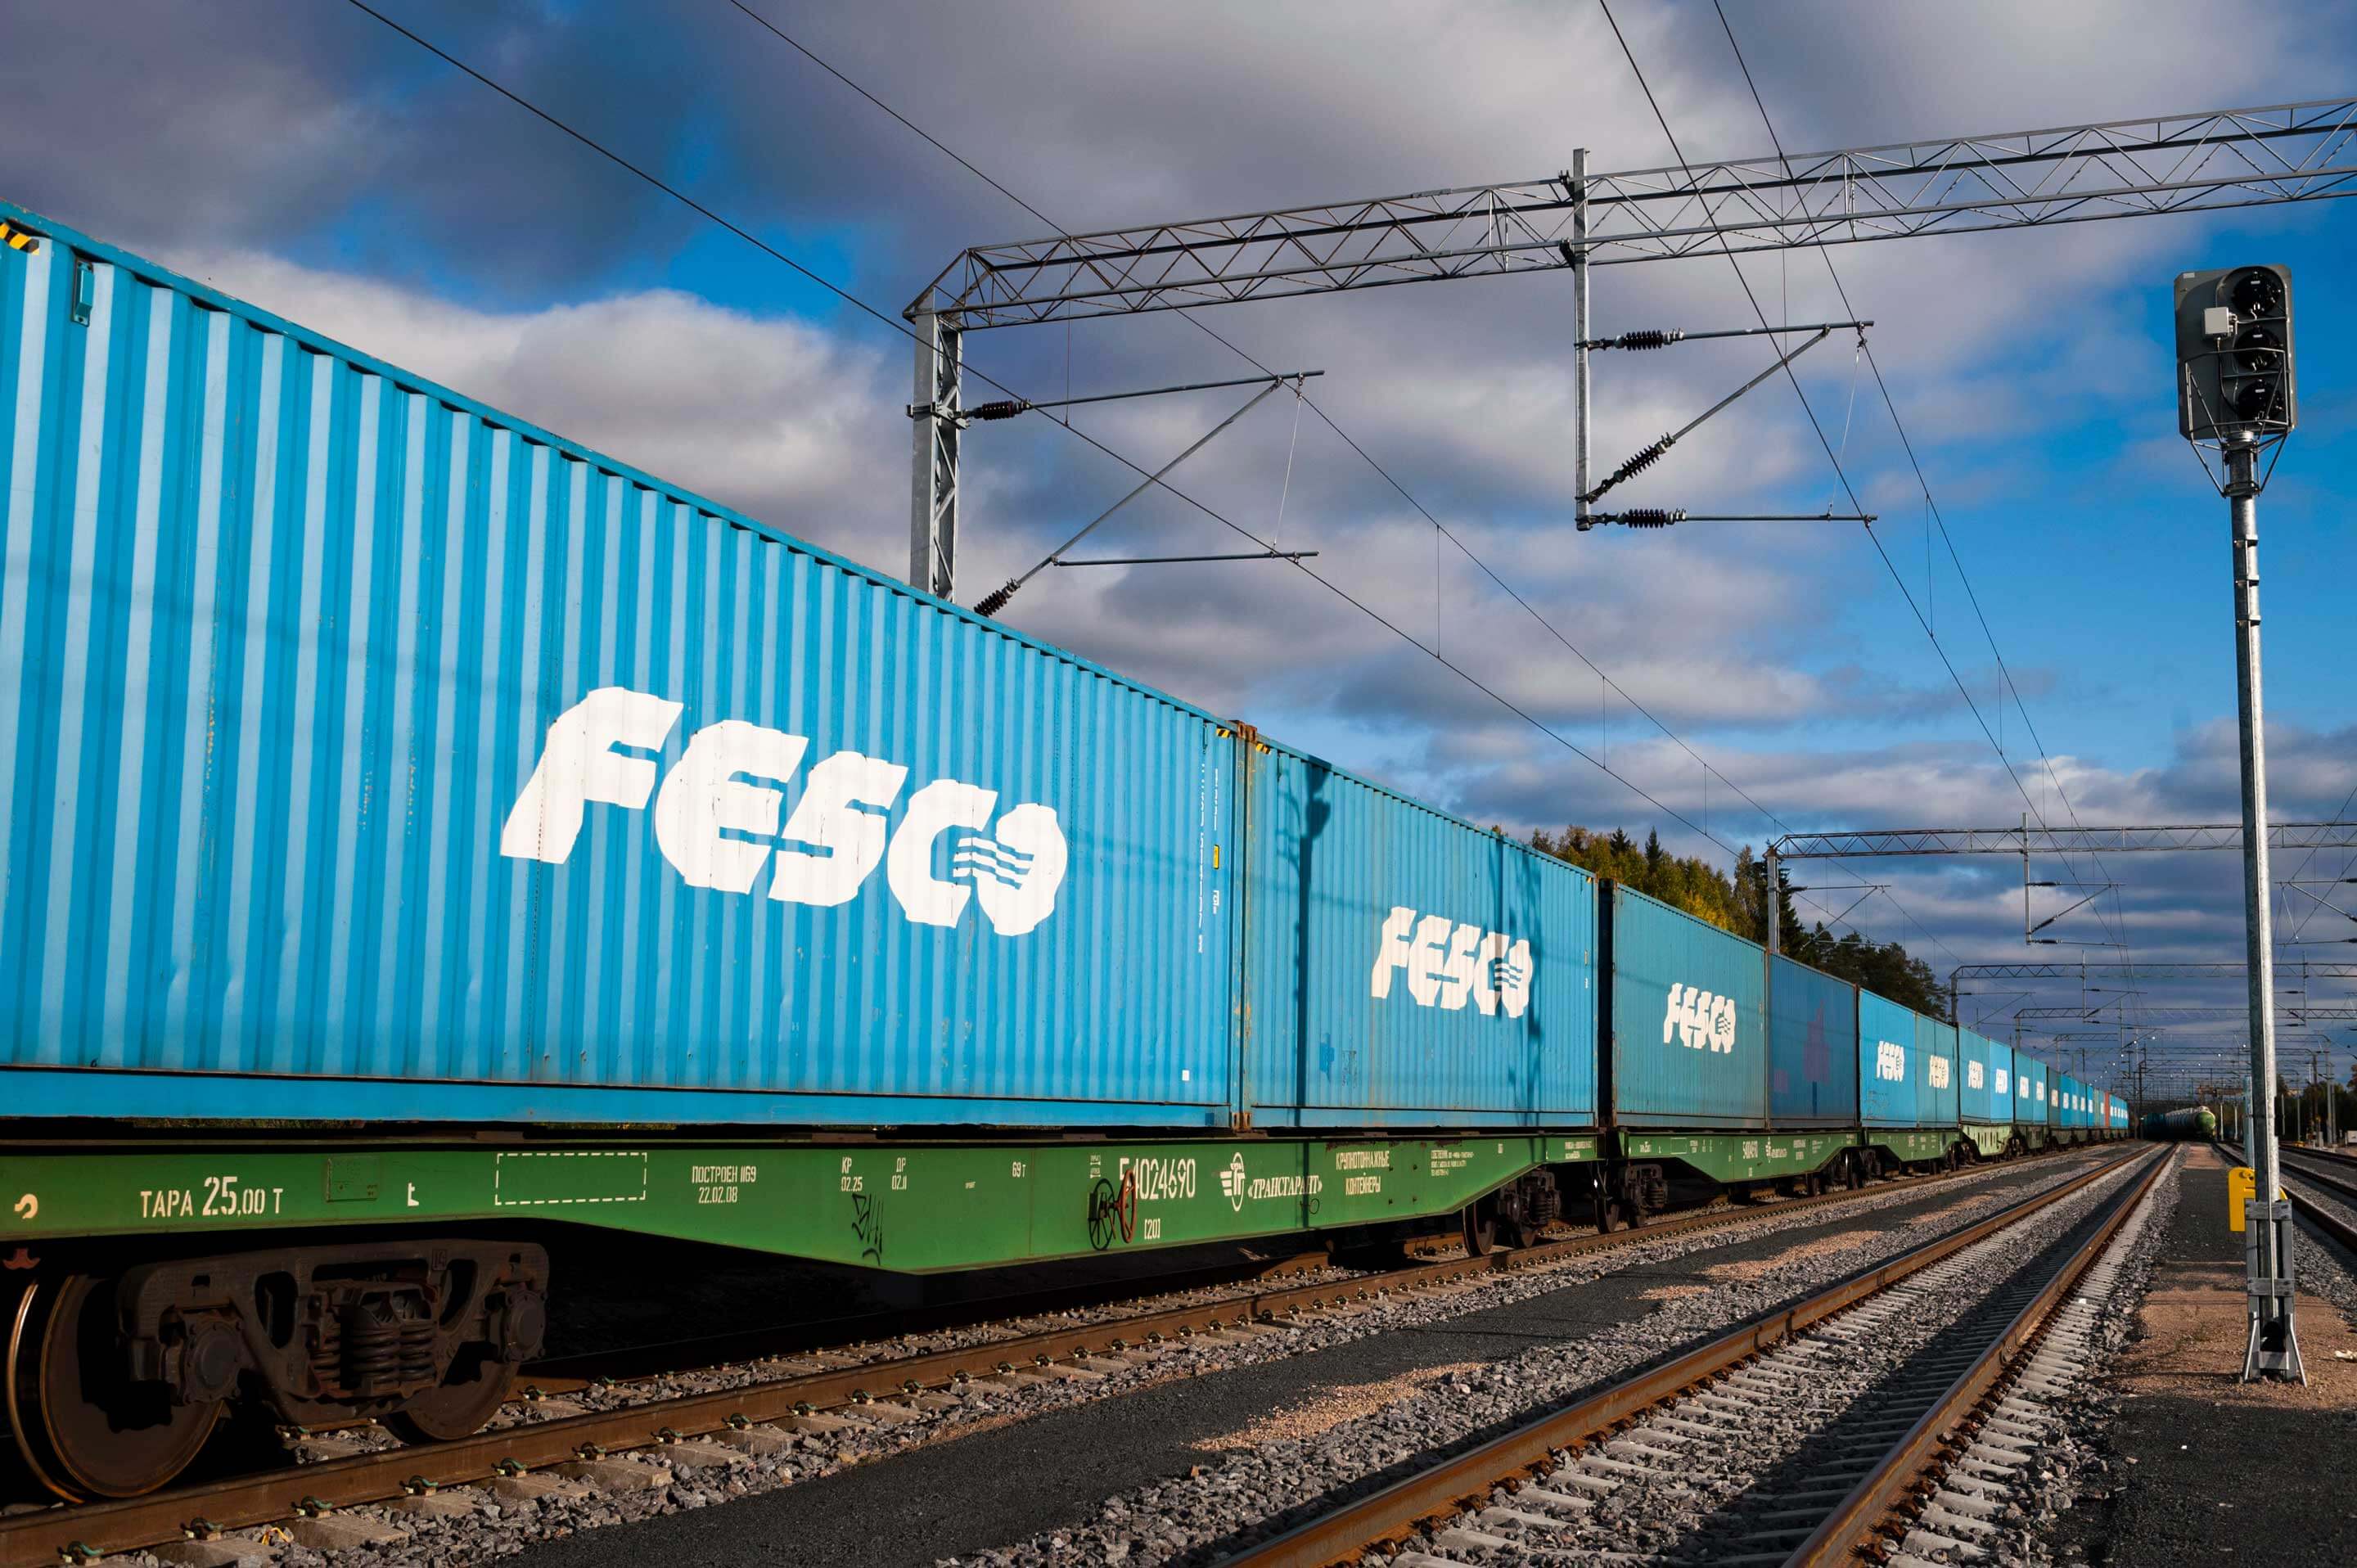 Buy-back of FESCO’s BO-01 и BO-02 series exchange-traded bonds based on irrevocable public tender offers